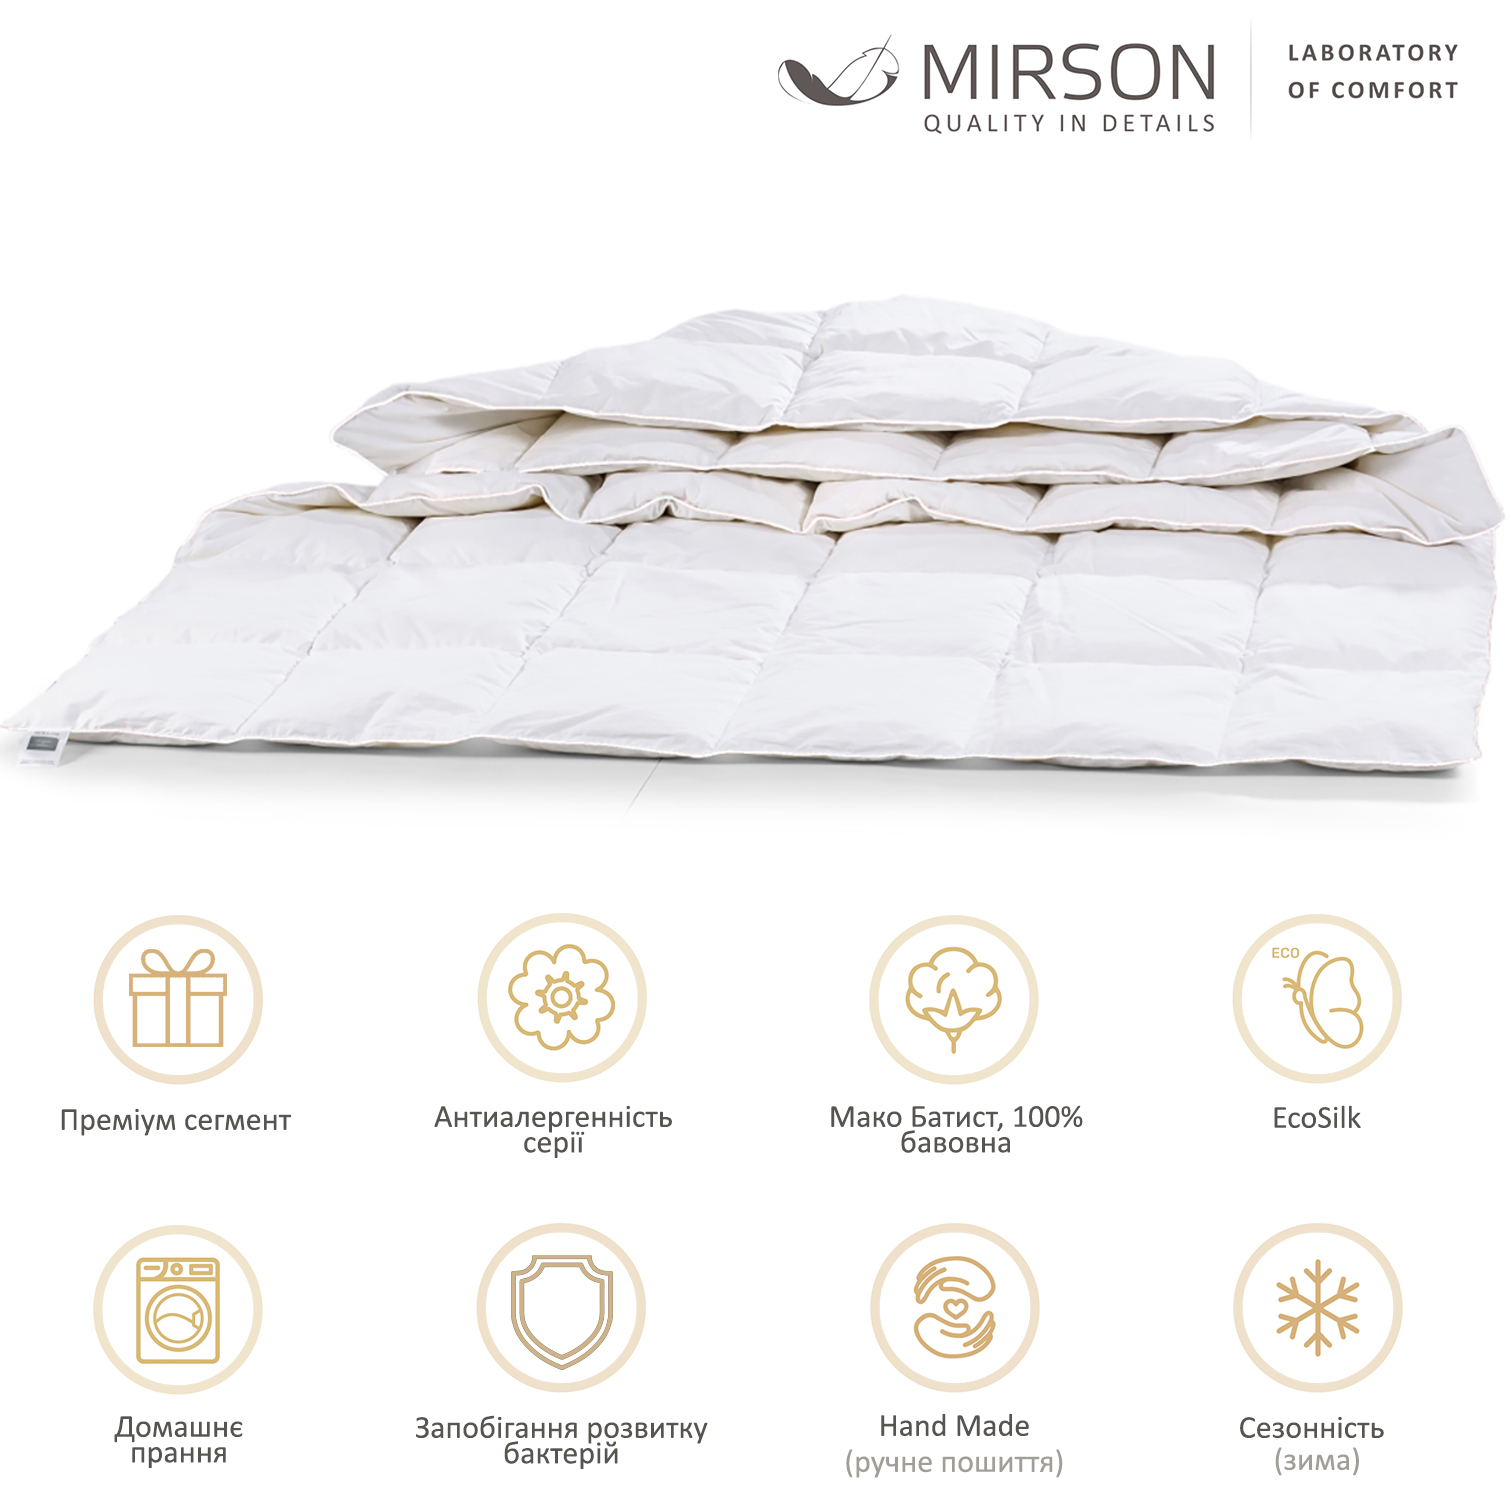 Ковдра антиалергенна MirSon Luxury Exclusive EcoSilk №1317, зимова, 155x215 см, біла (237054445) - фото 5